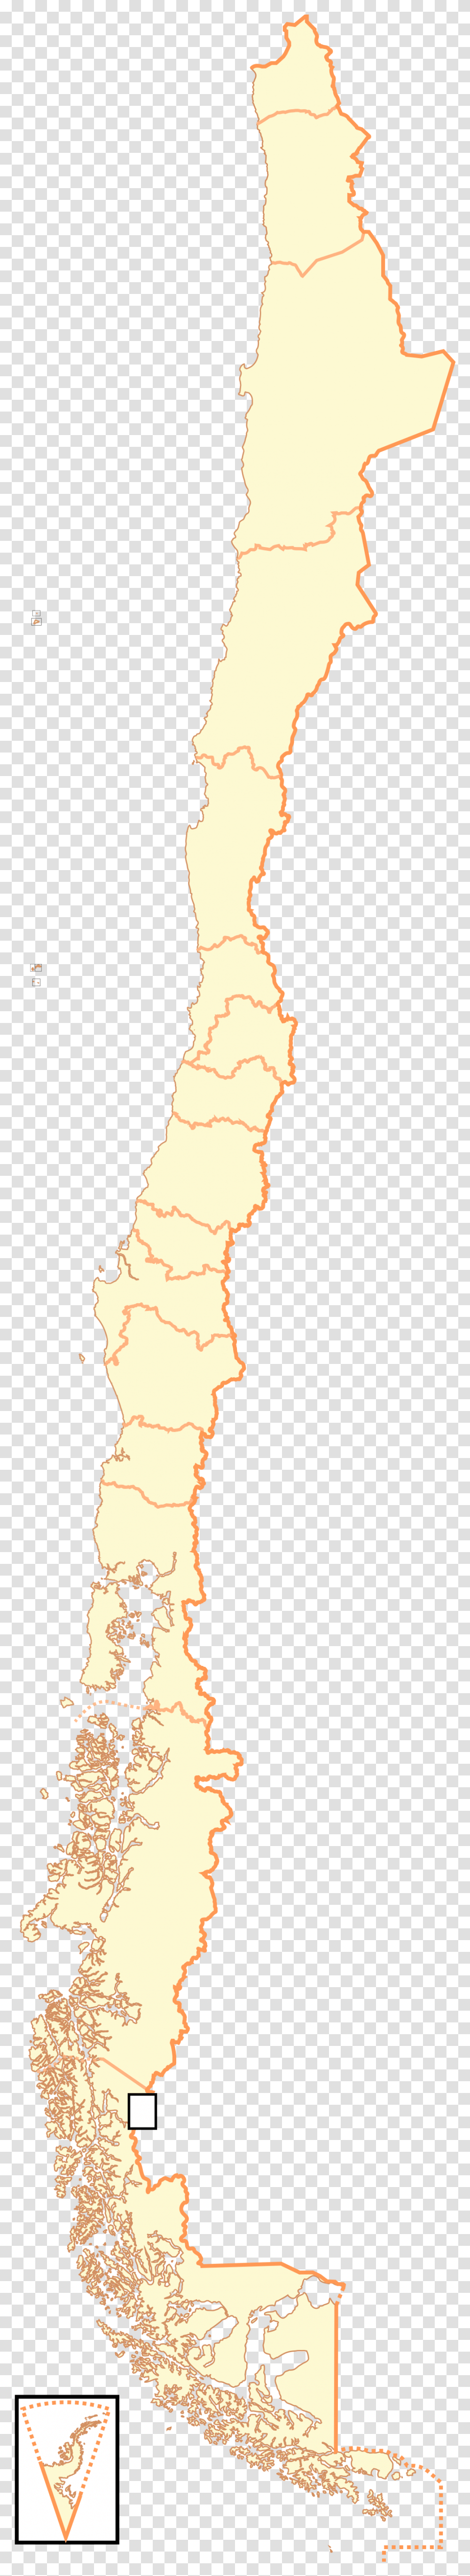 Mapa De Chile Con Regiones En, Diagram, Plot, Fire, Atlas Transparent Png